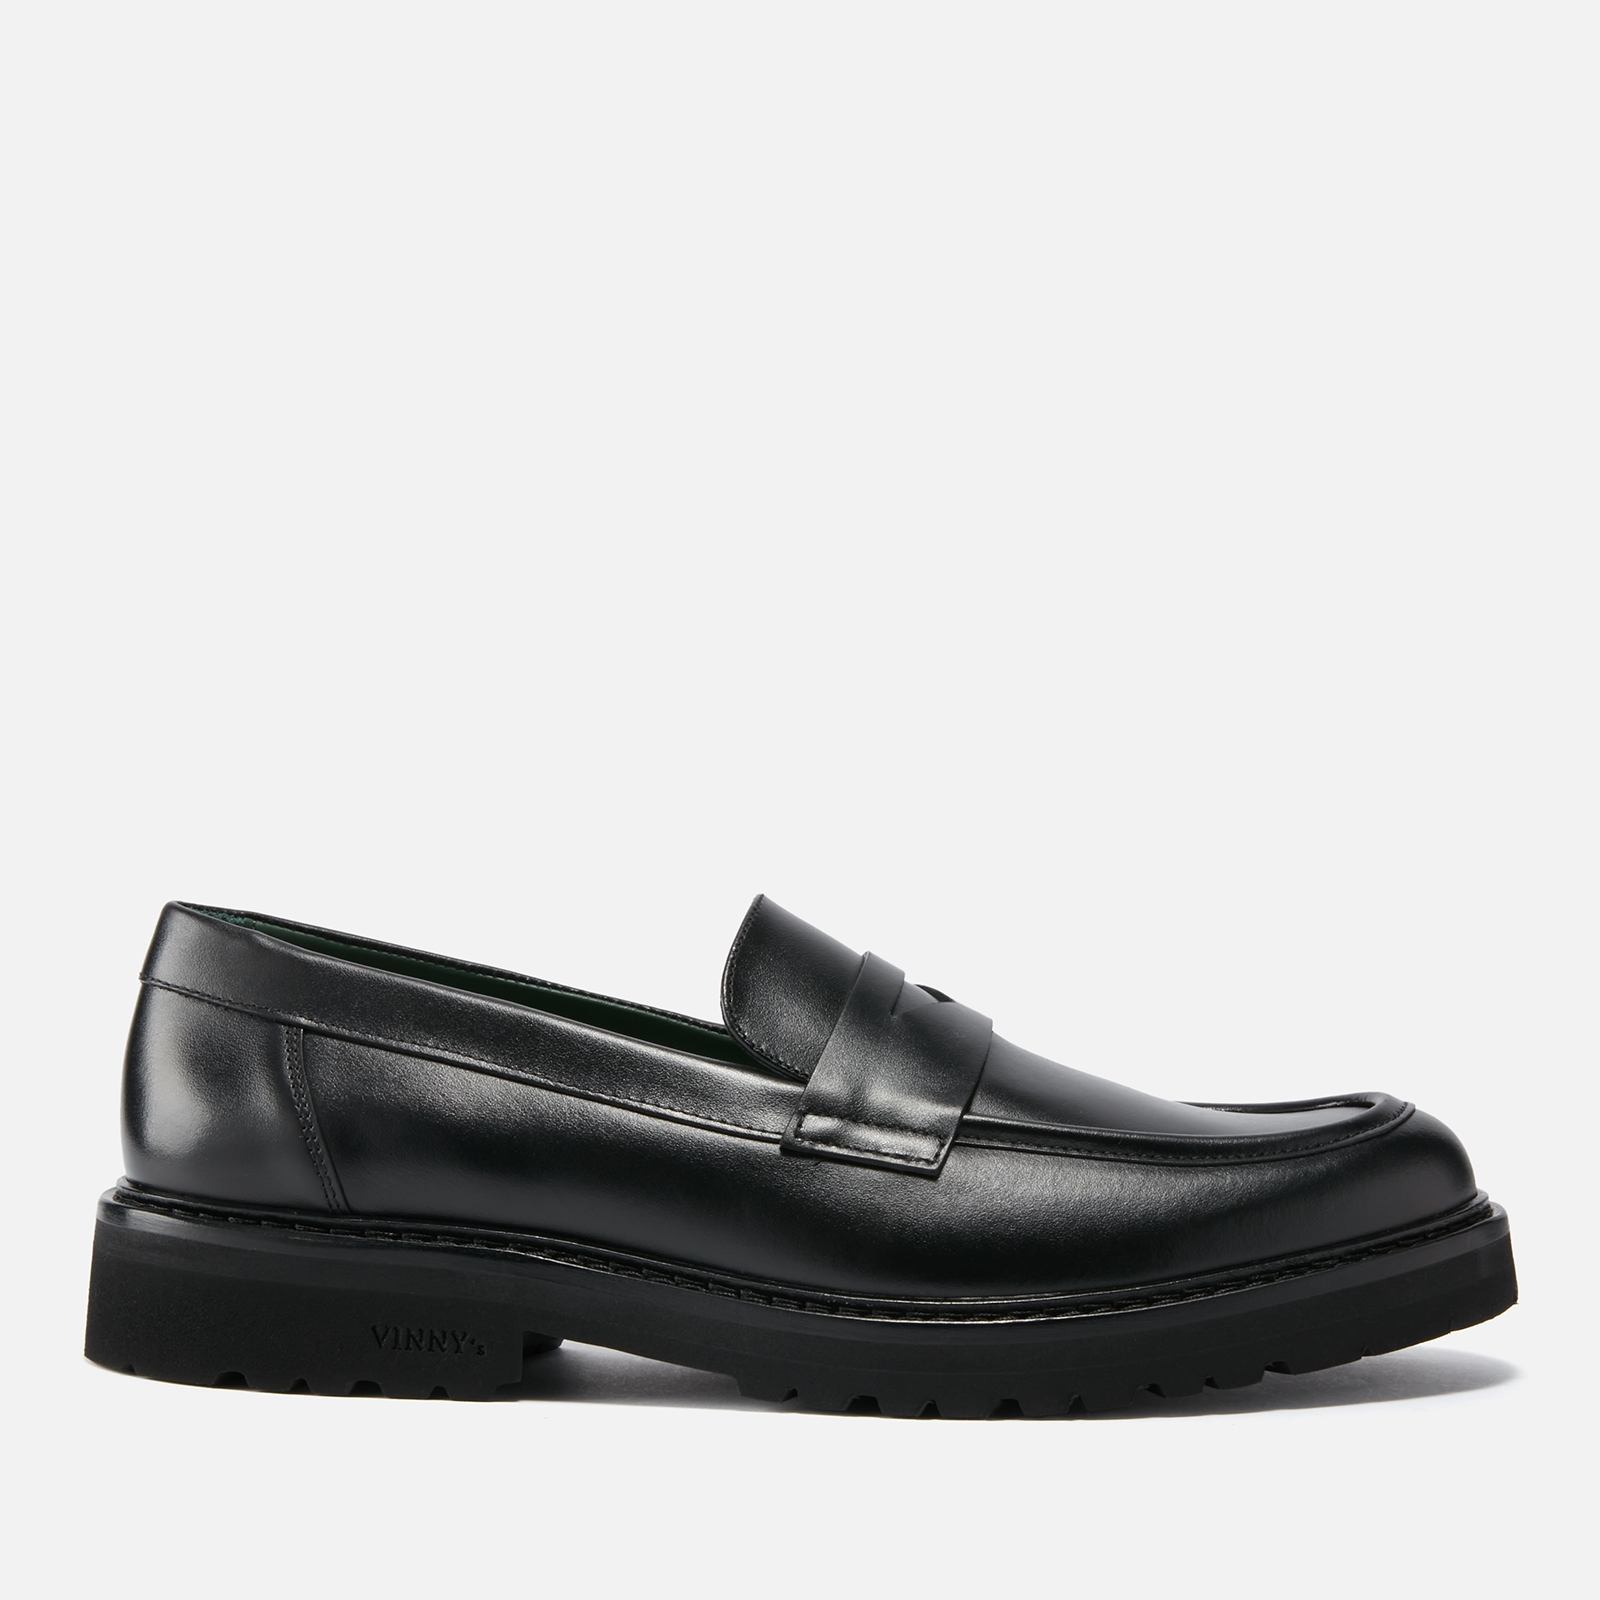 Vinny's Men's Richee Penny Loafers - Black Nappa Leather - UK 7